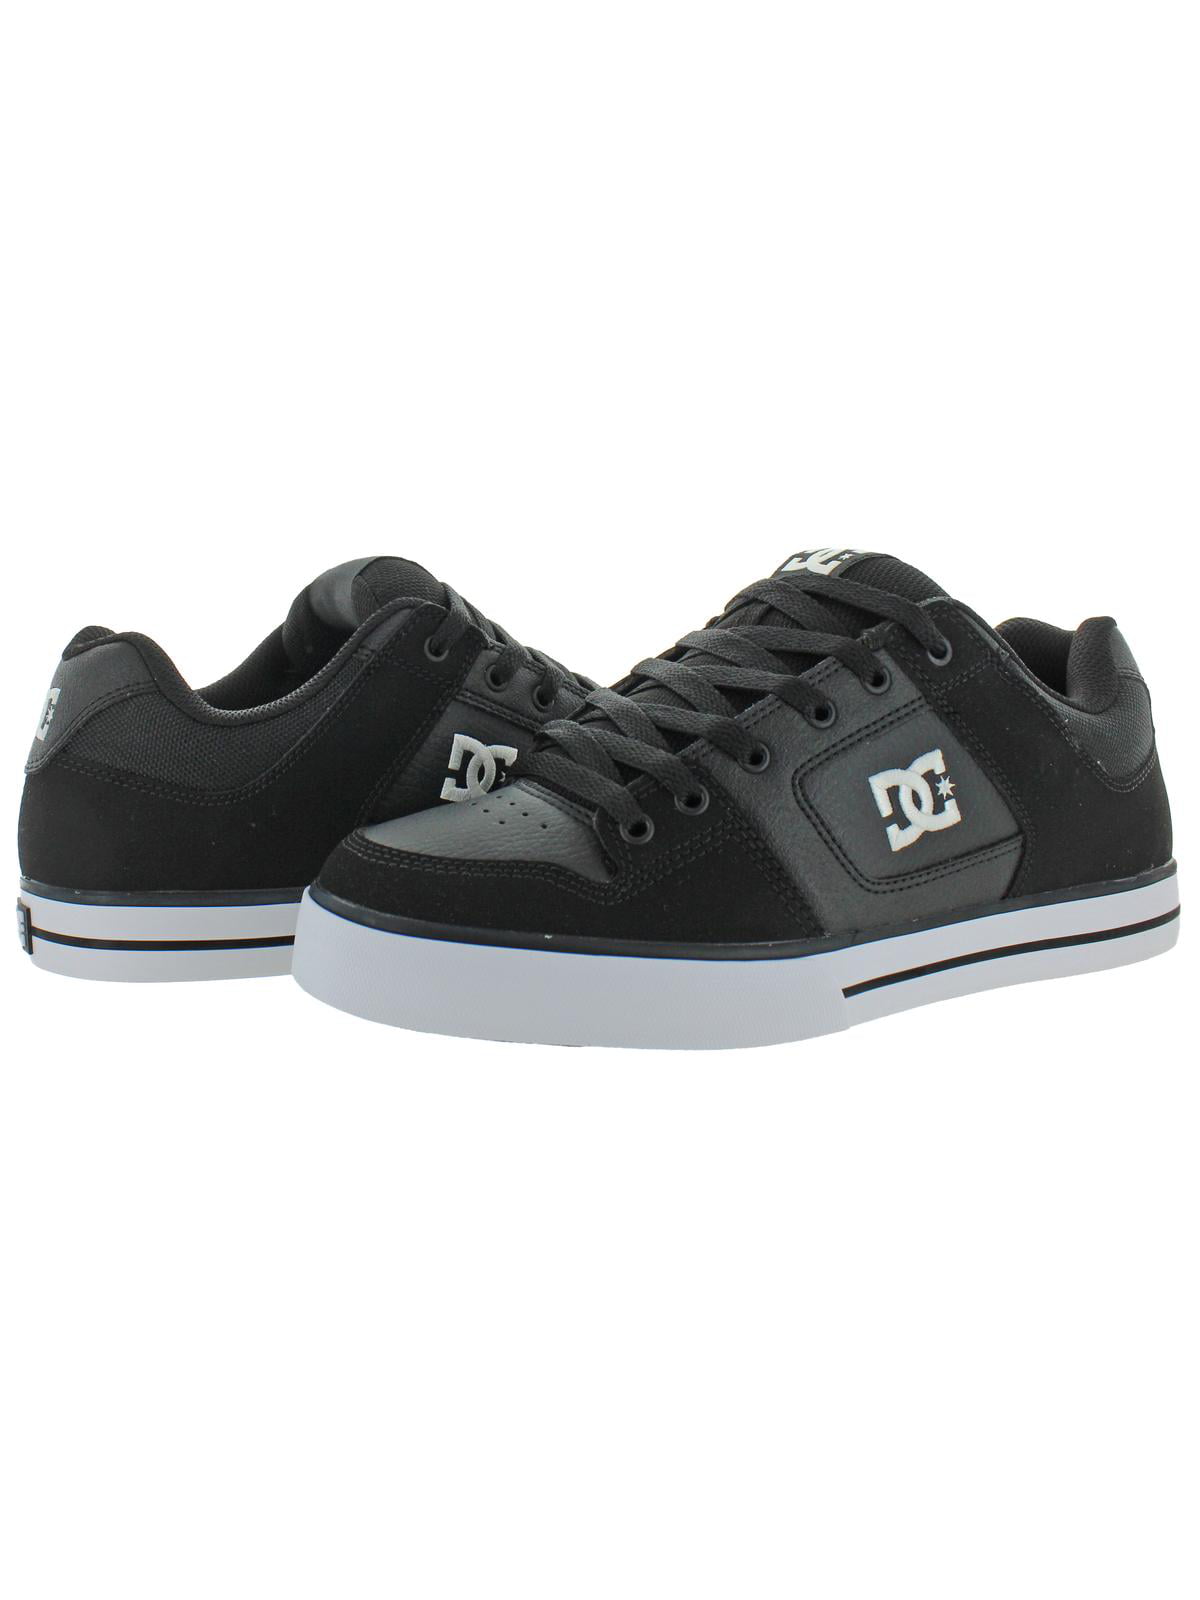 DC Shoes Men's Pure Black/Black/White Skateboarding Sneakers Shoes 